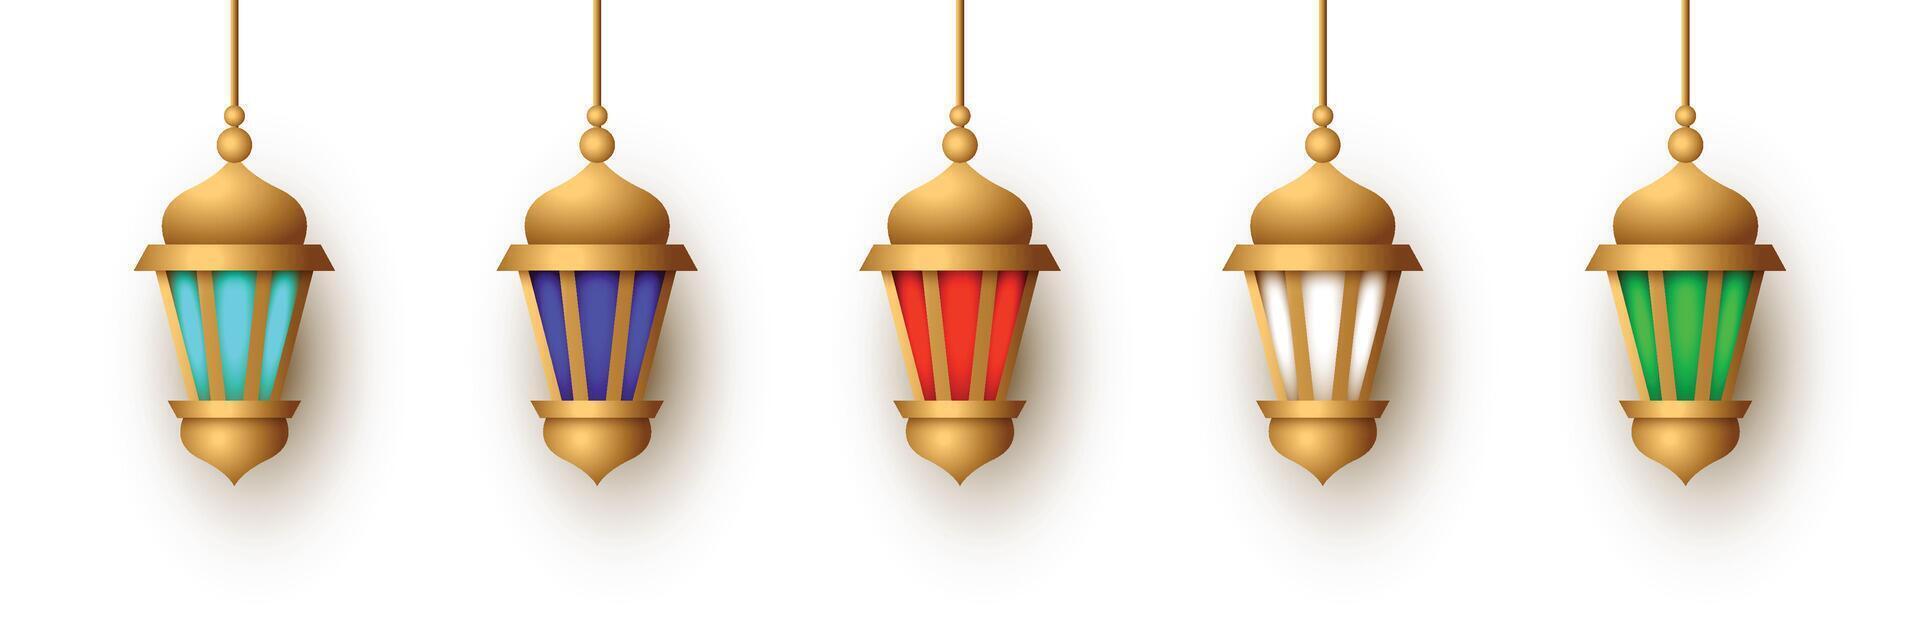 realistic lantern ornament vector set collection design